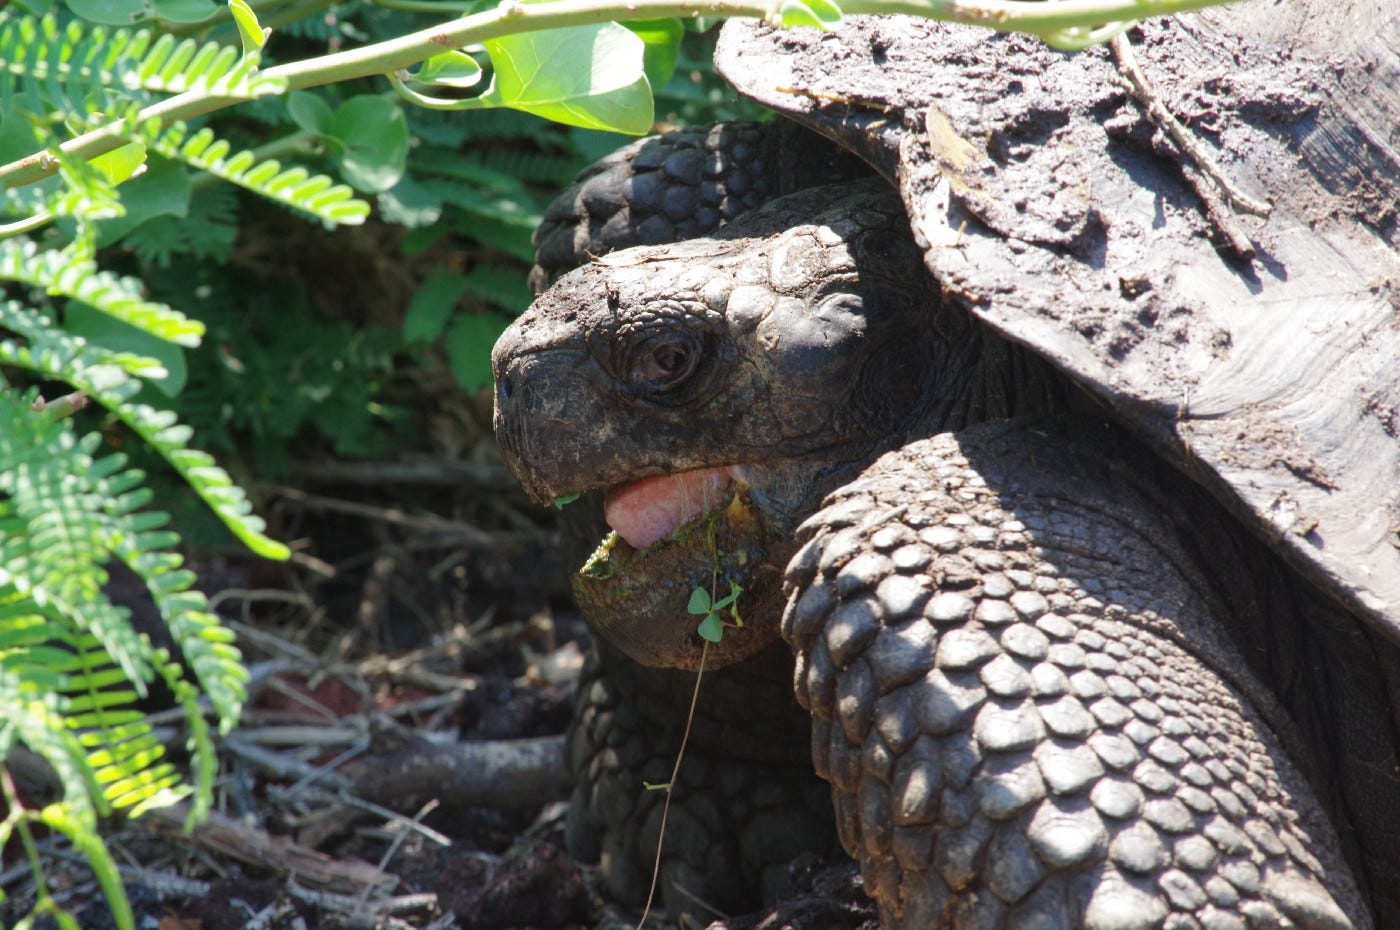 Land tortoise, Galápagos. Photo by Bret, 3-30-16